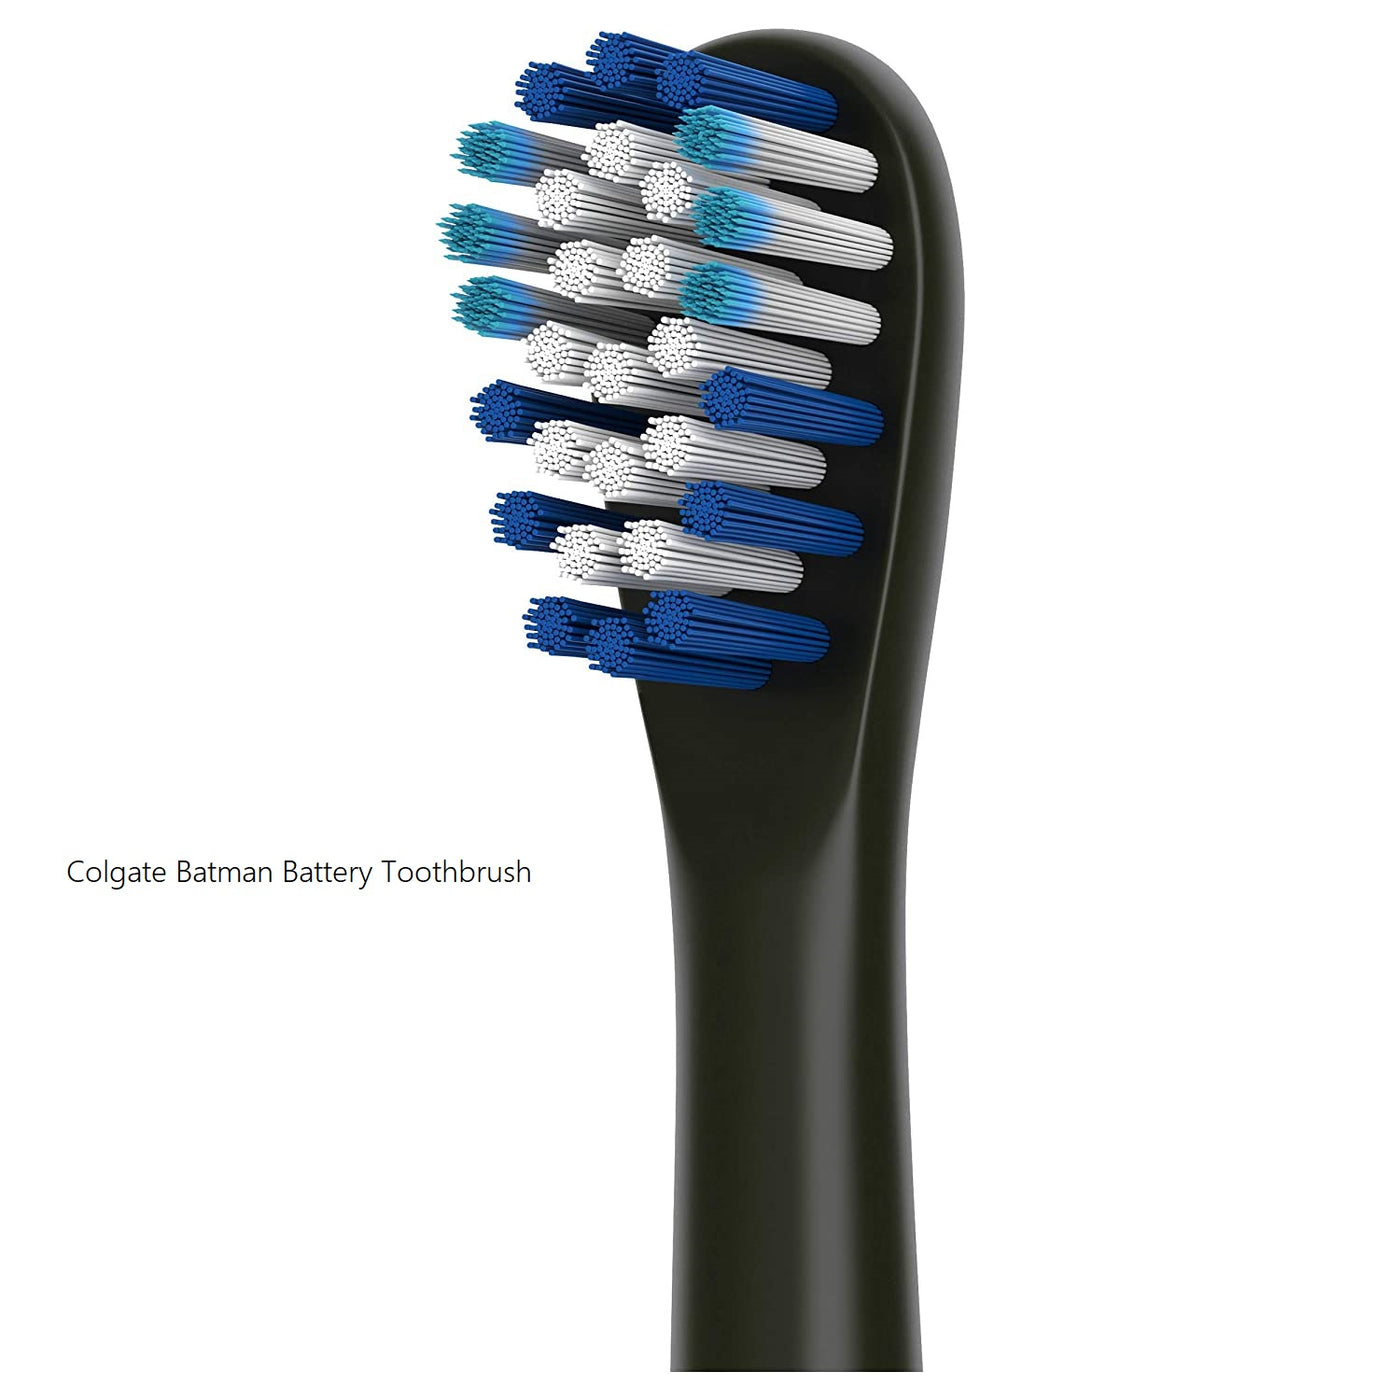 Colgate Batman Toothpaste (80g) + Colgate Batman Battery Toothbrush